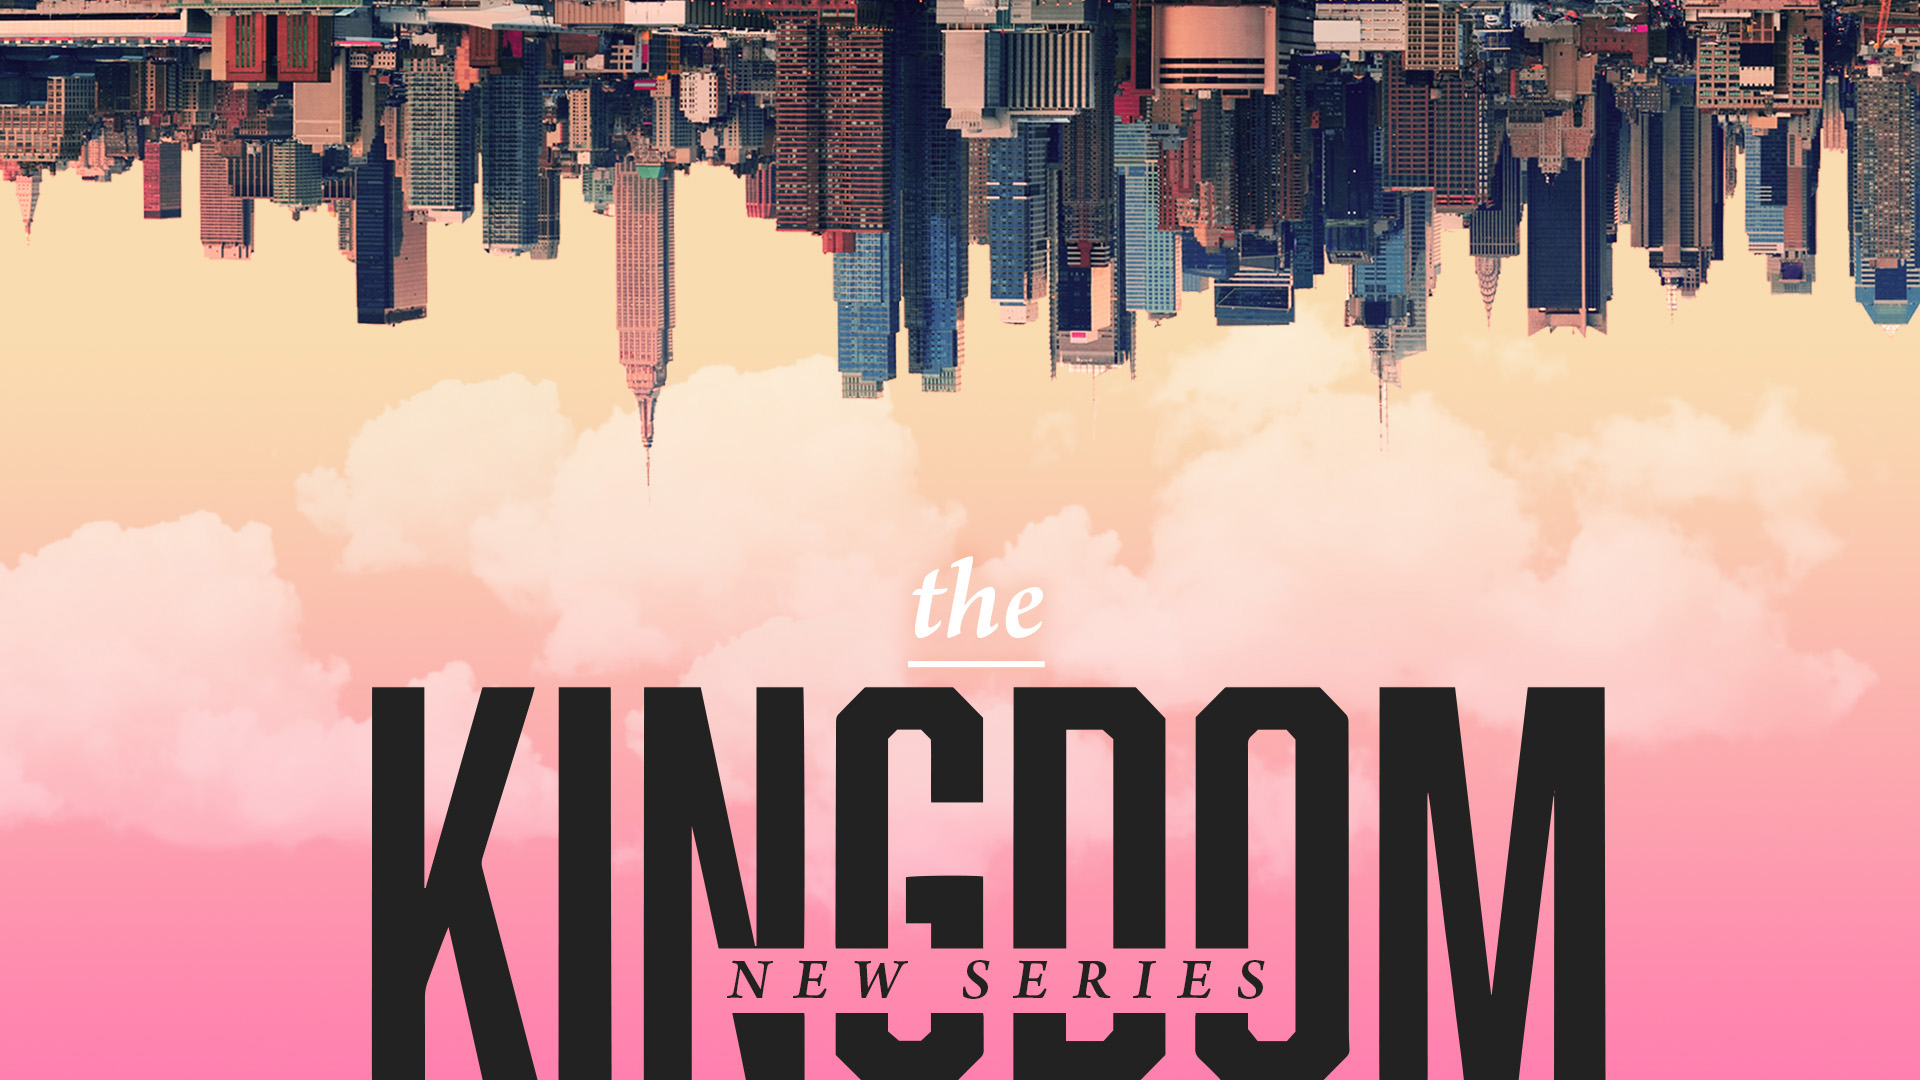 The Kingdom - Message graphic